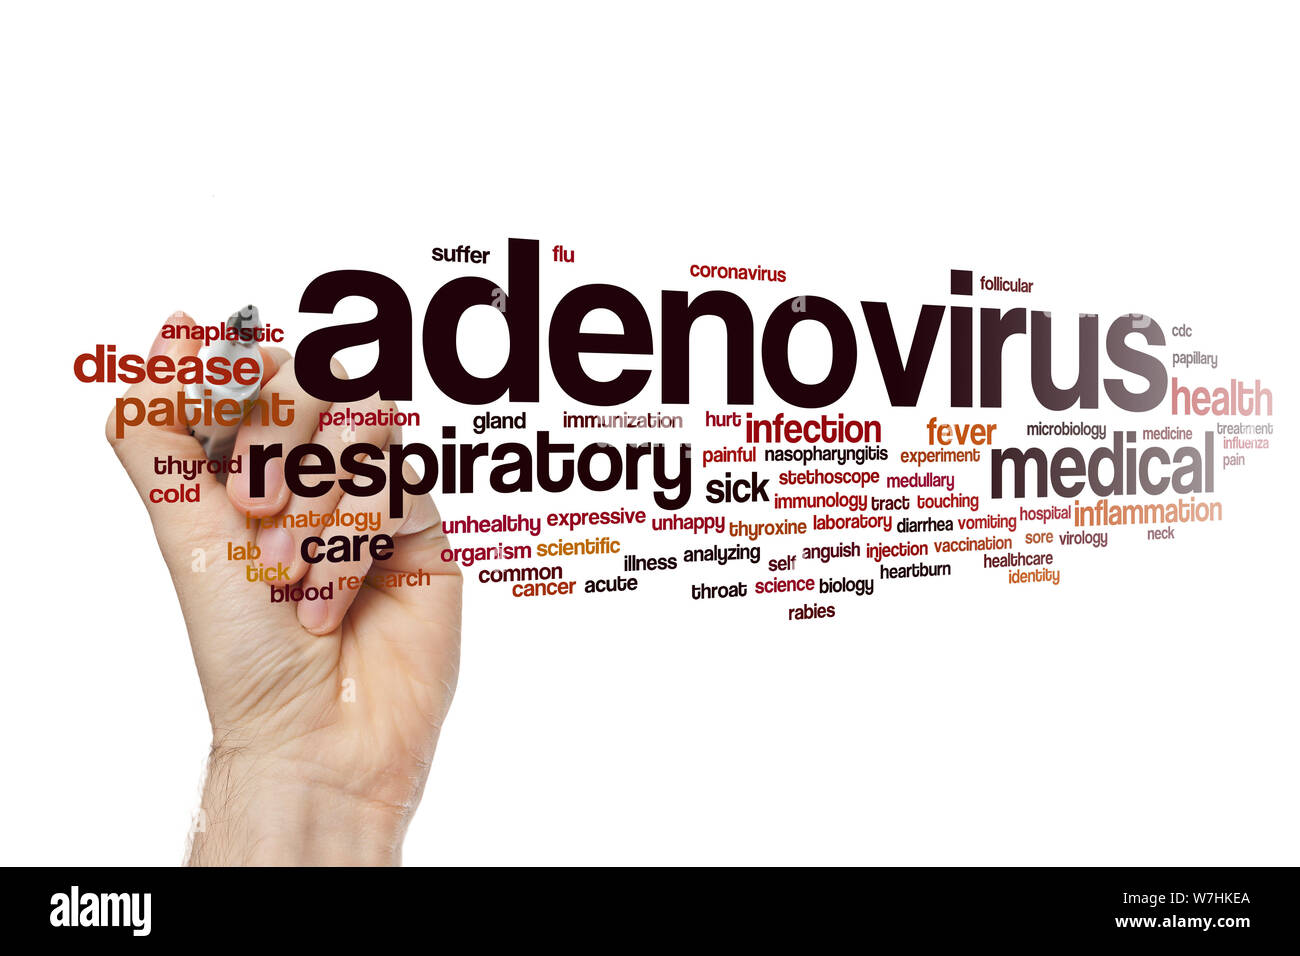 Adenovirus word cloud concept Stock Photo